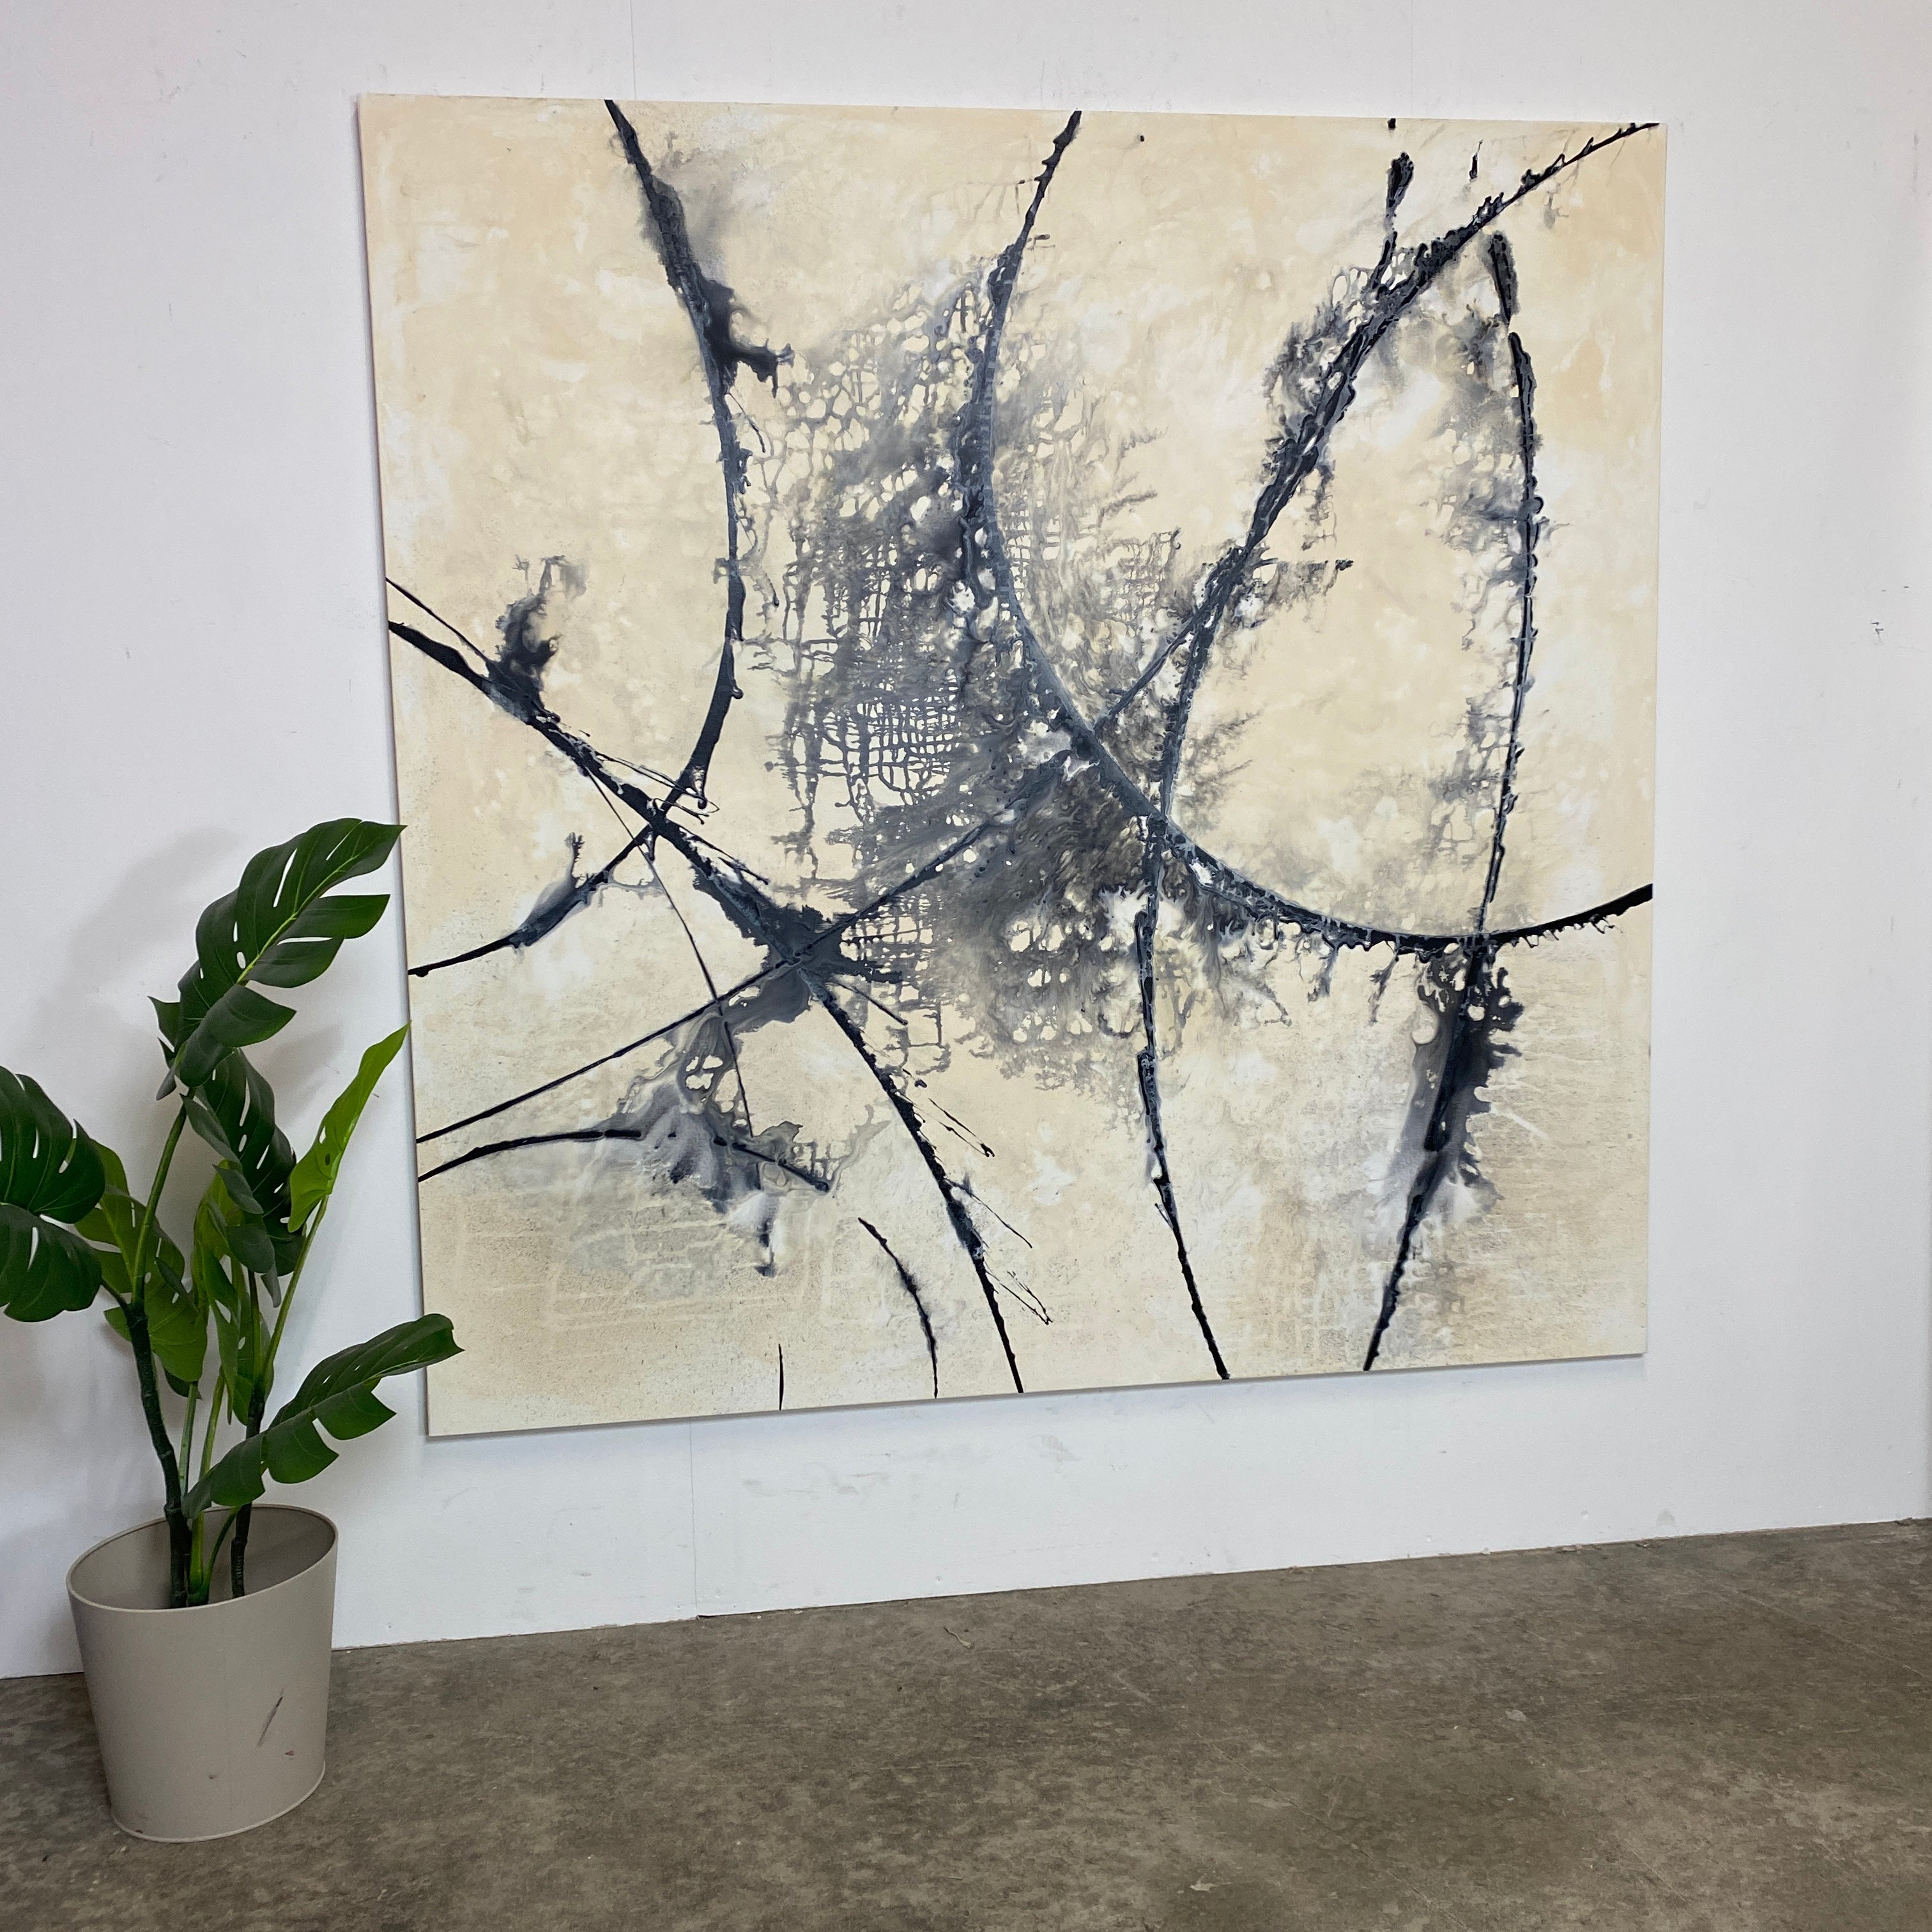 Painting: "Sand Octopus #3" 150 x 150 cm